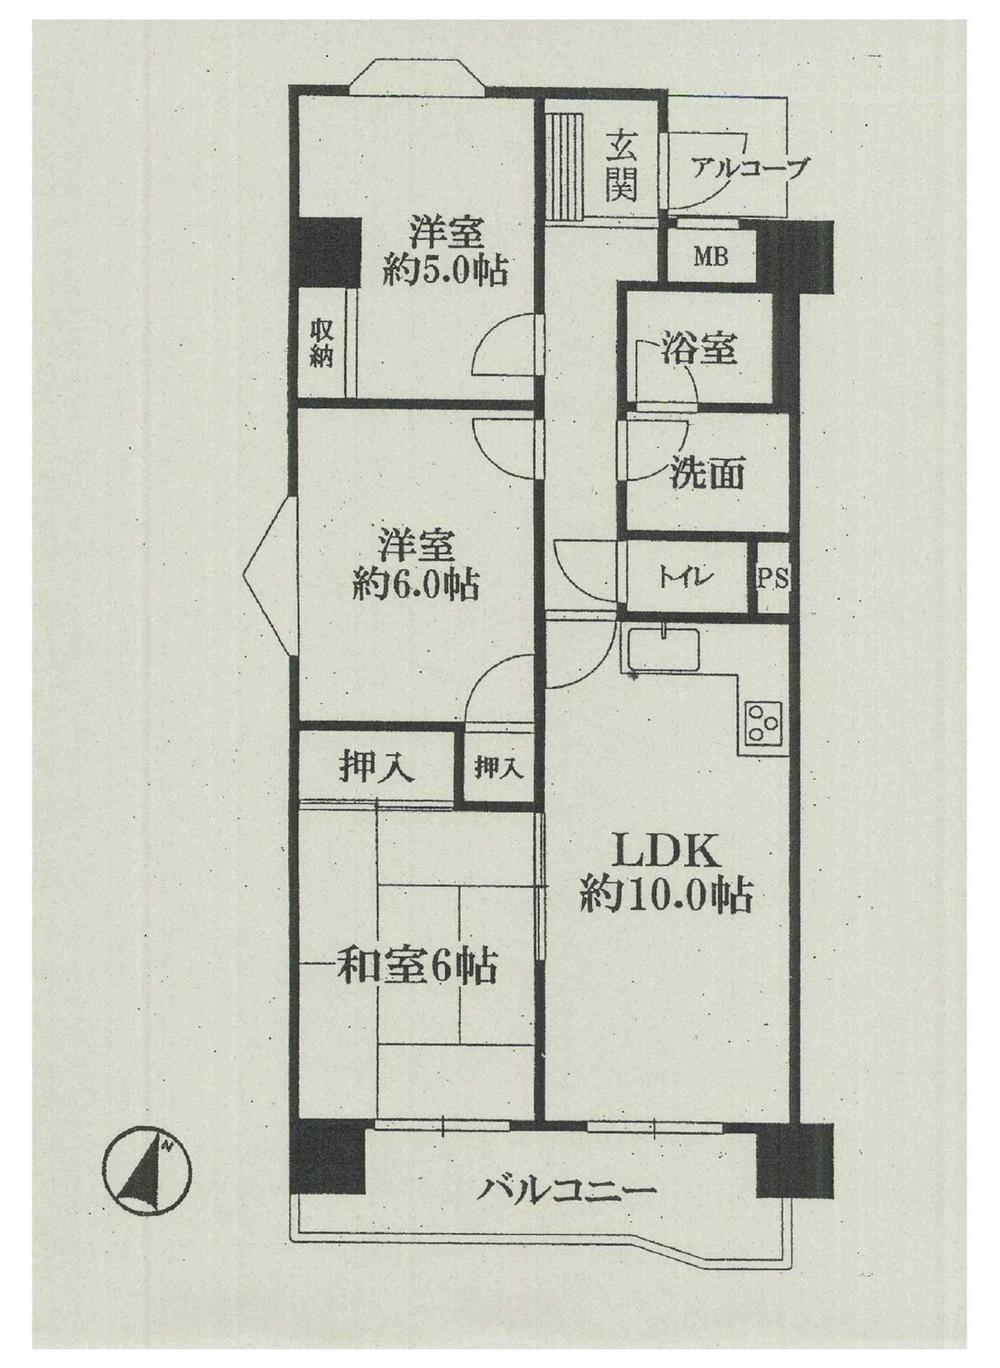 Floor plan. 3DK, Price 13.8 million yen, Occupied area 63.22 sq m , Balcony area 10.9 sq m